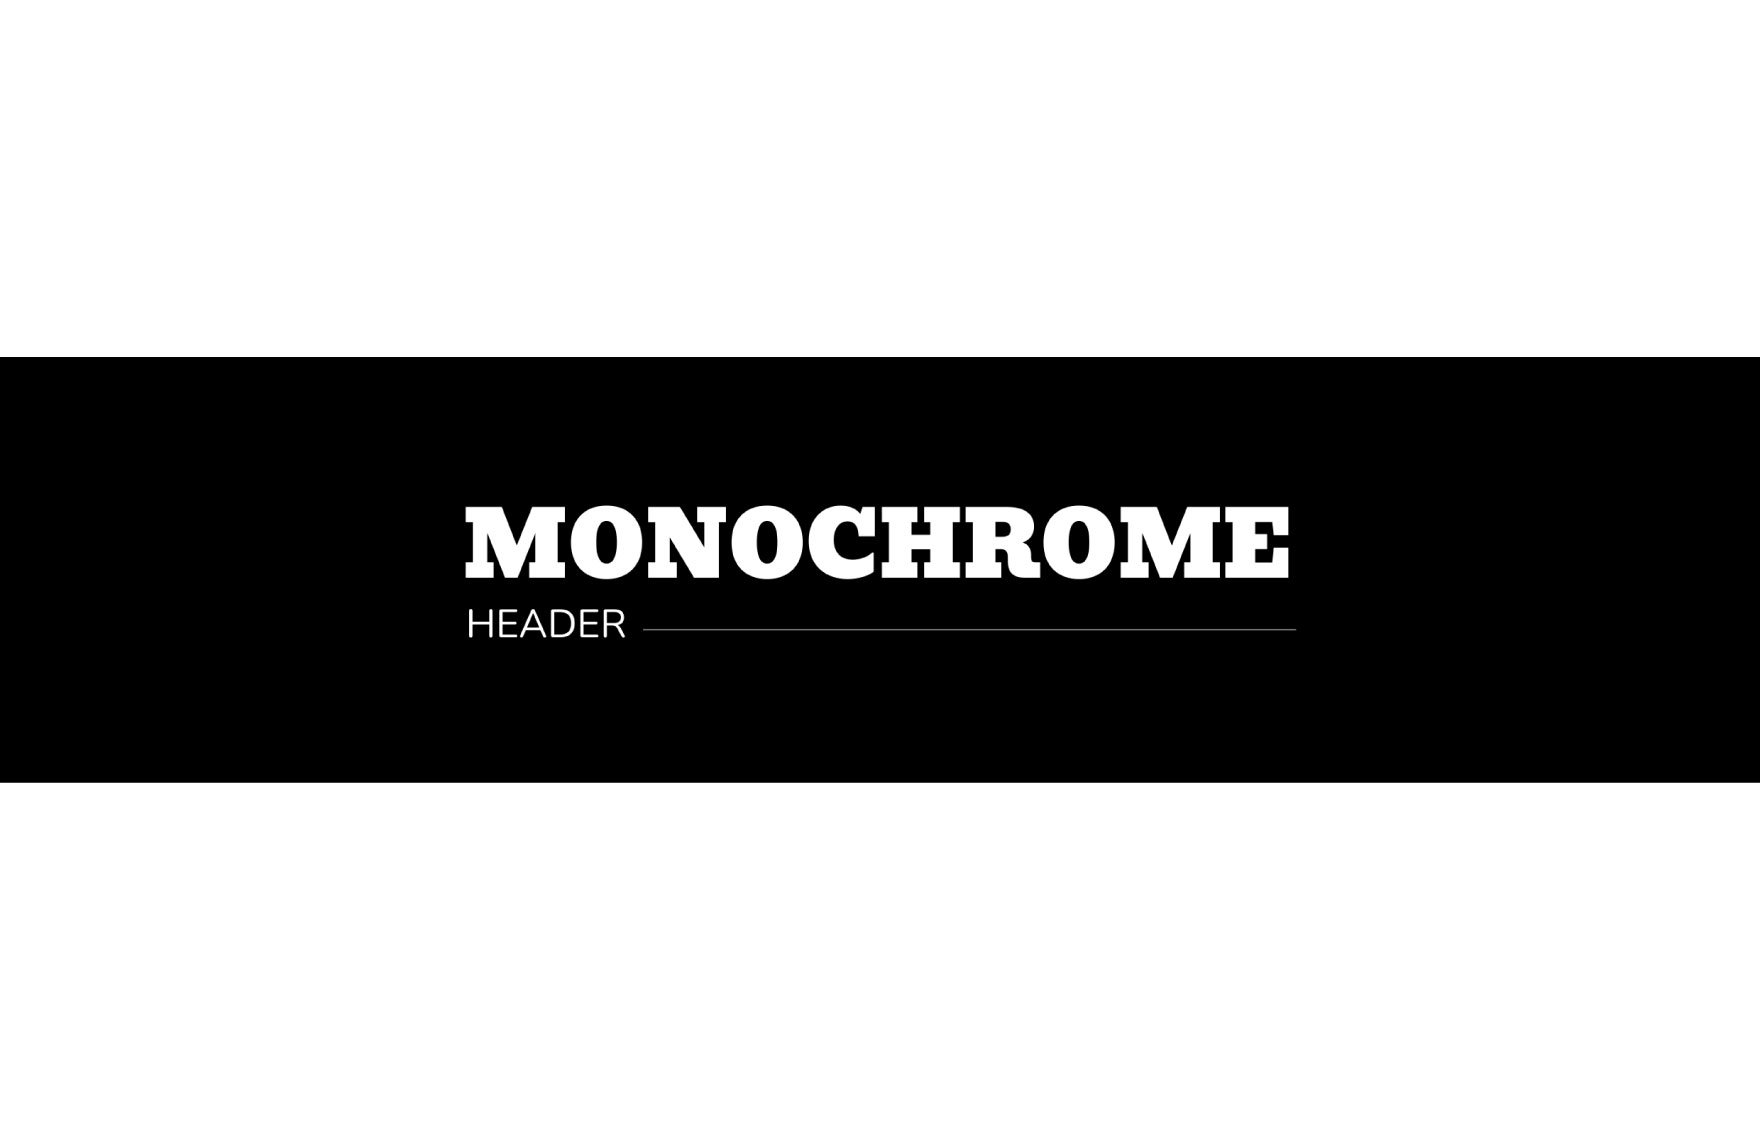 Monochrome H1 Header Template